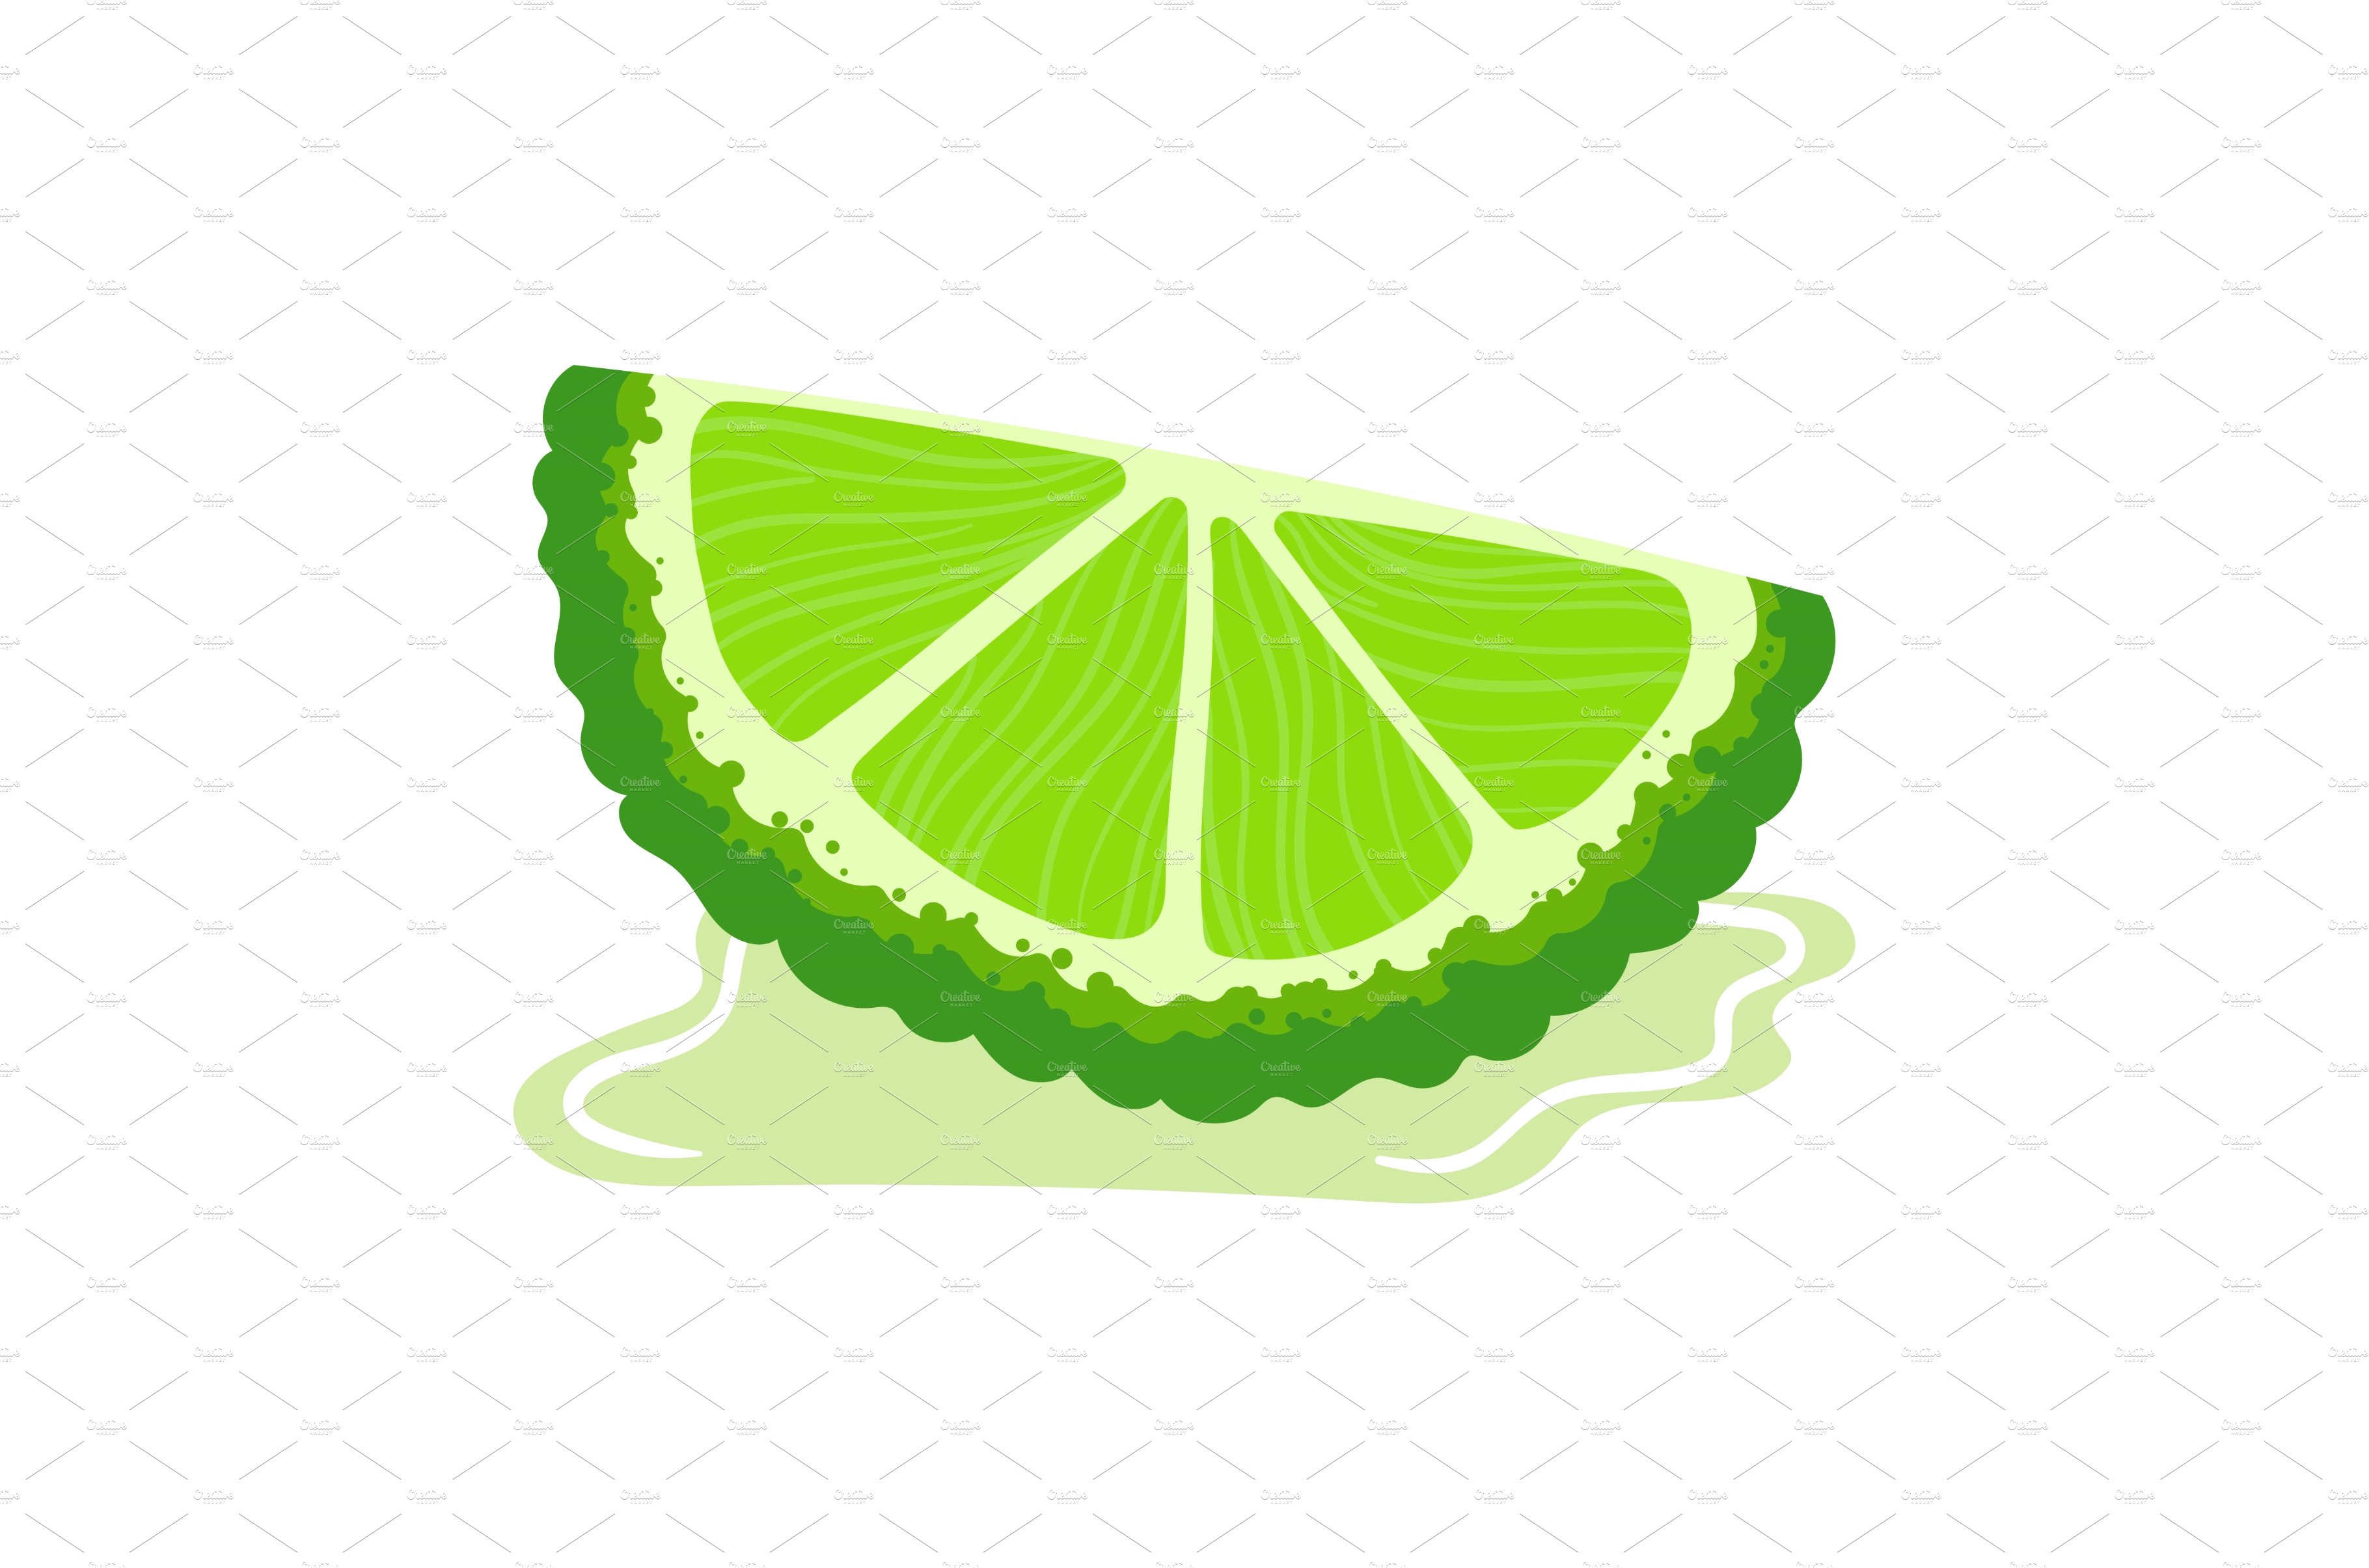 Organic citrus green fruit slice cover image.